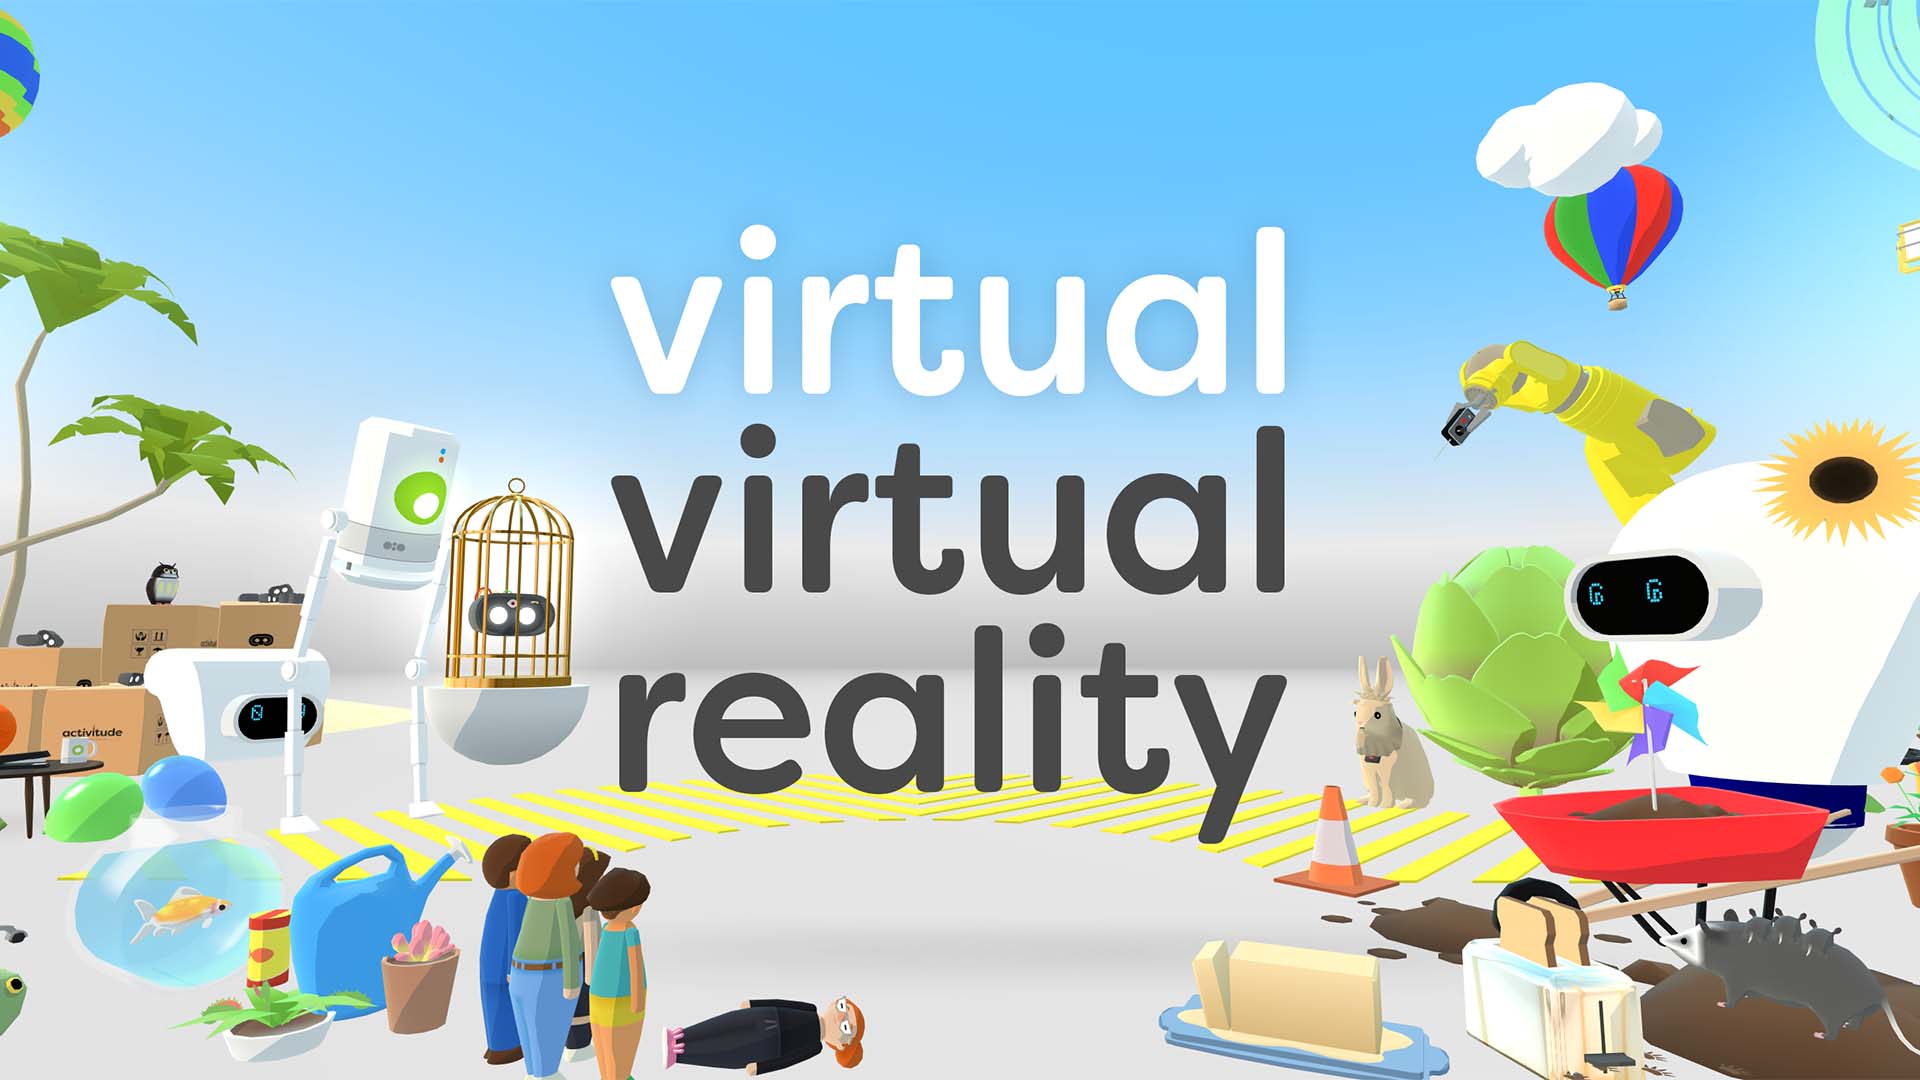 Virtual virtual reality